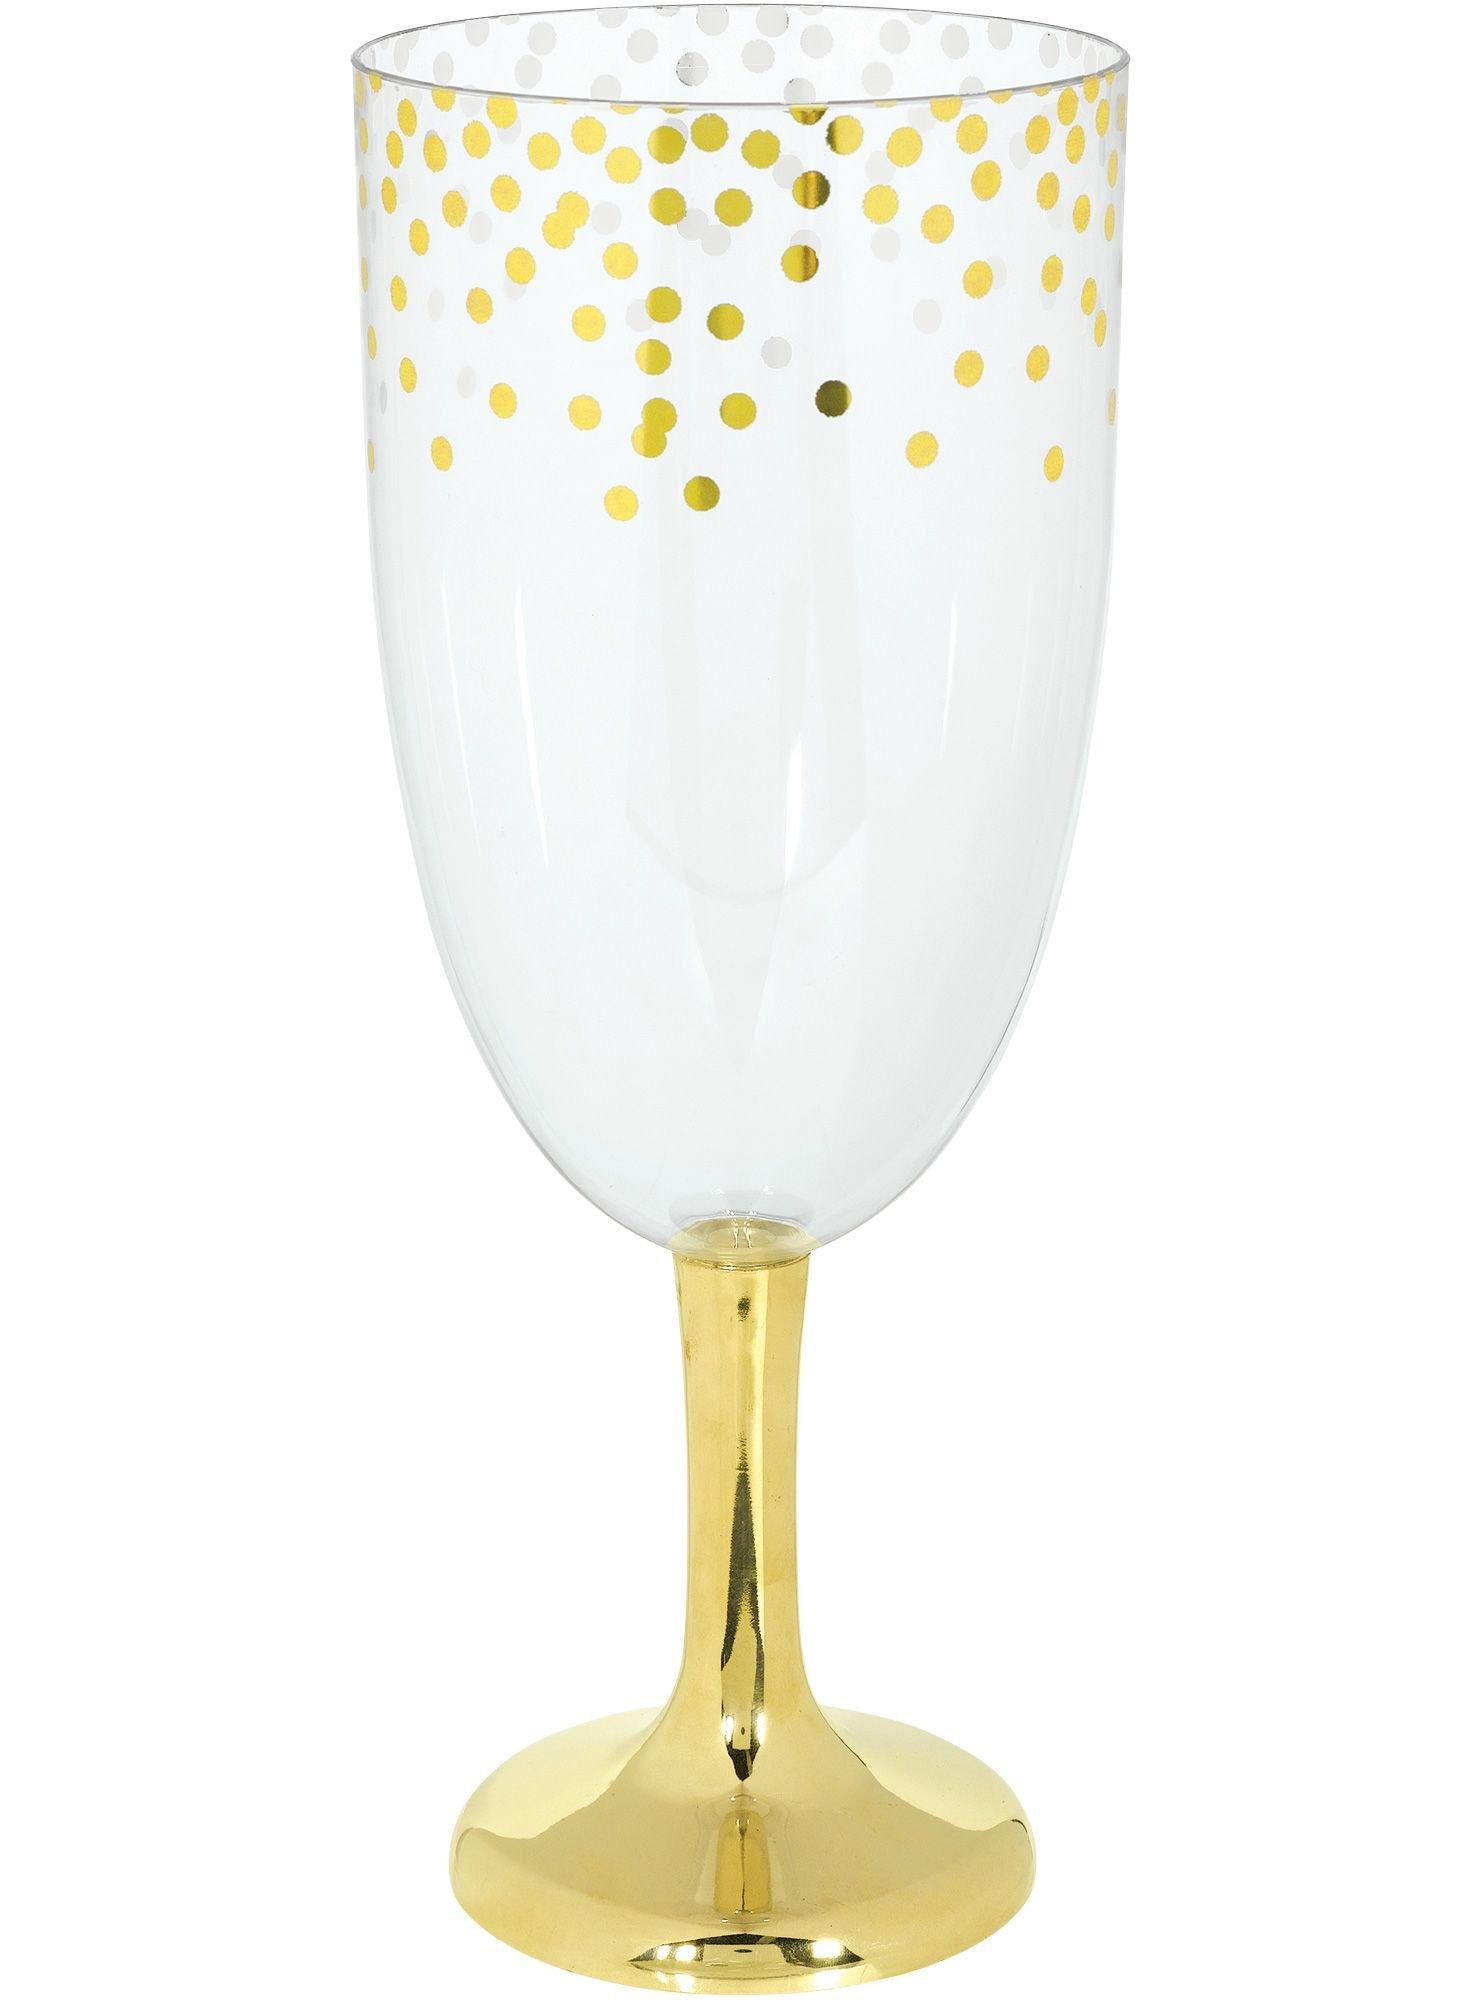 Giant Metallic Gold Polka Dots Plastic Wine Glass